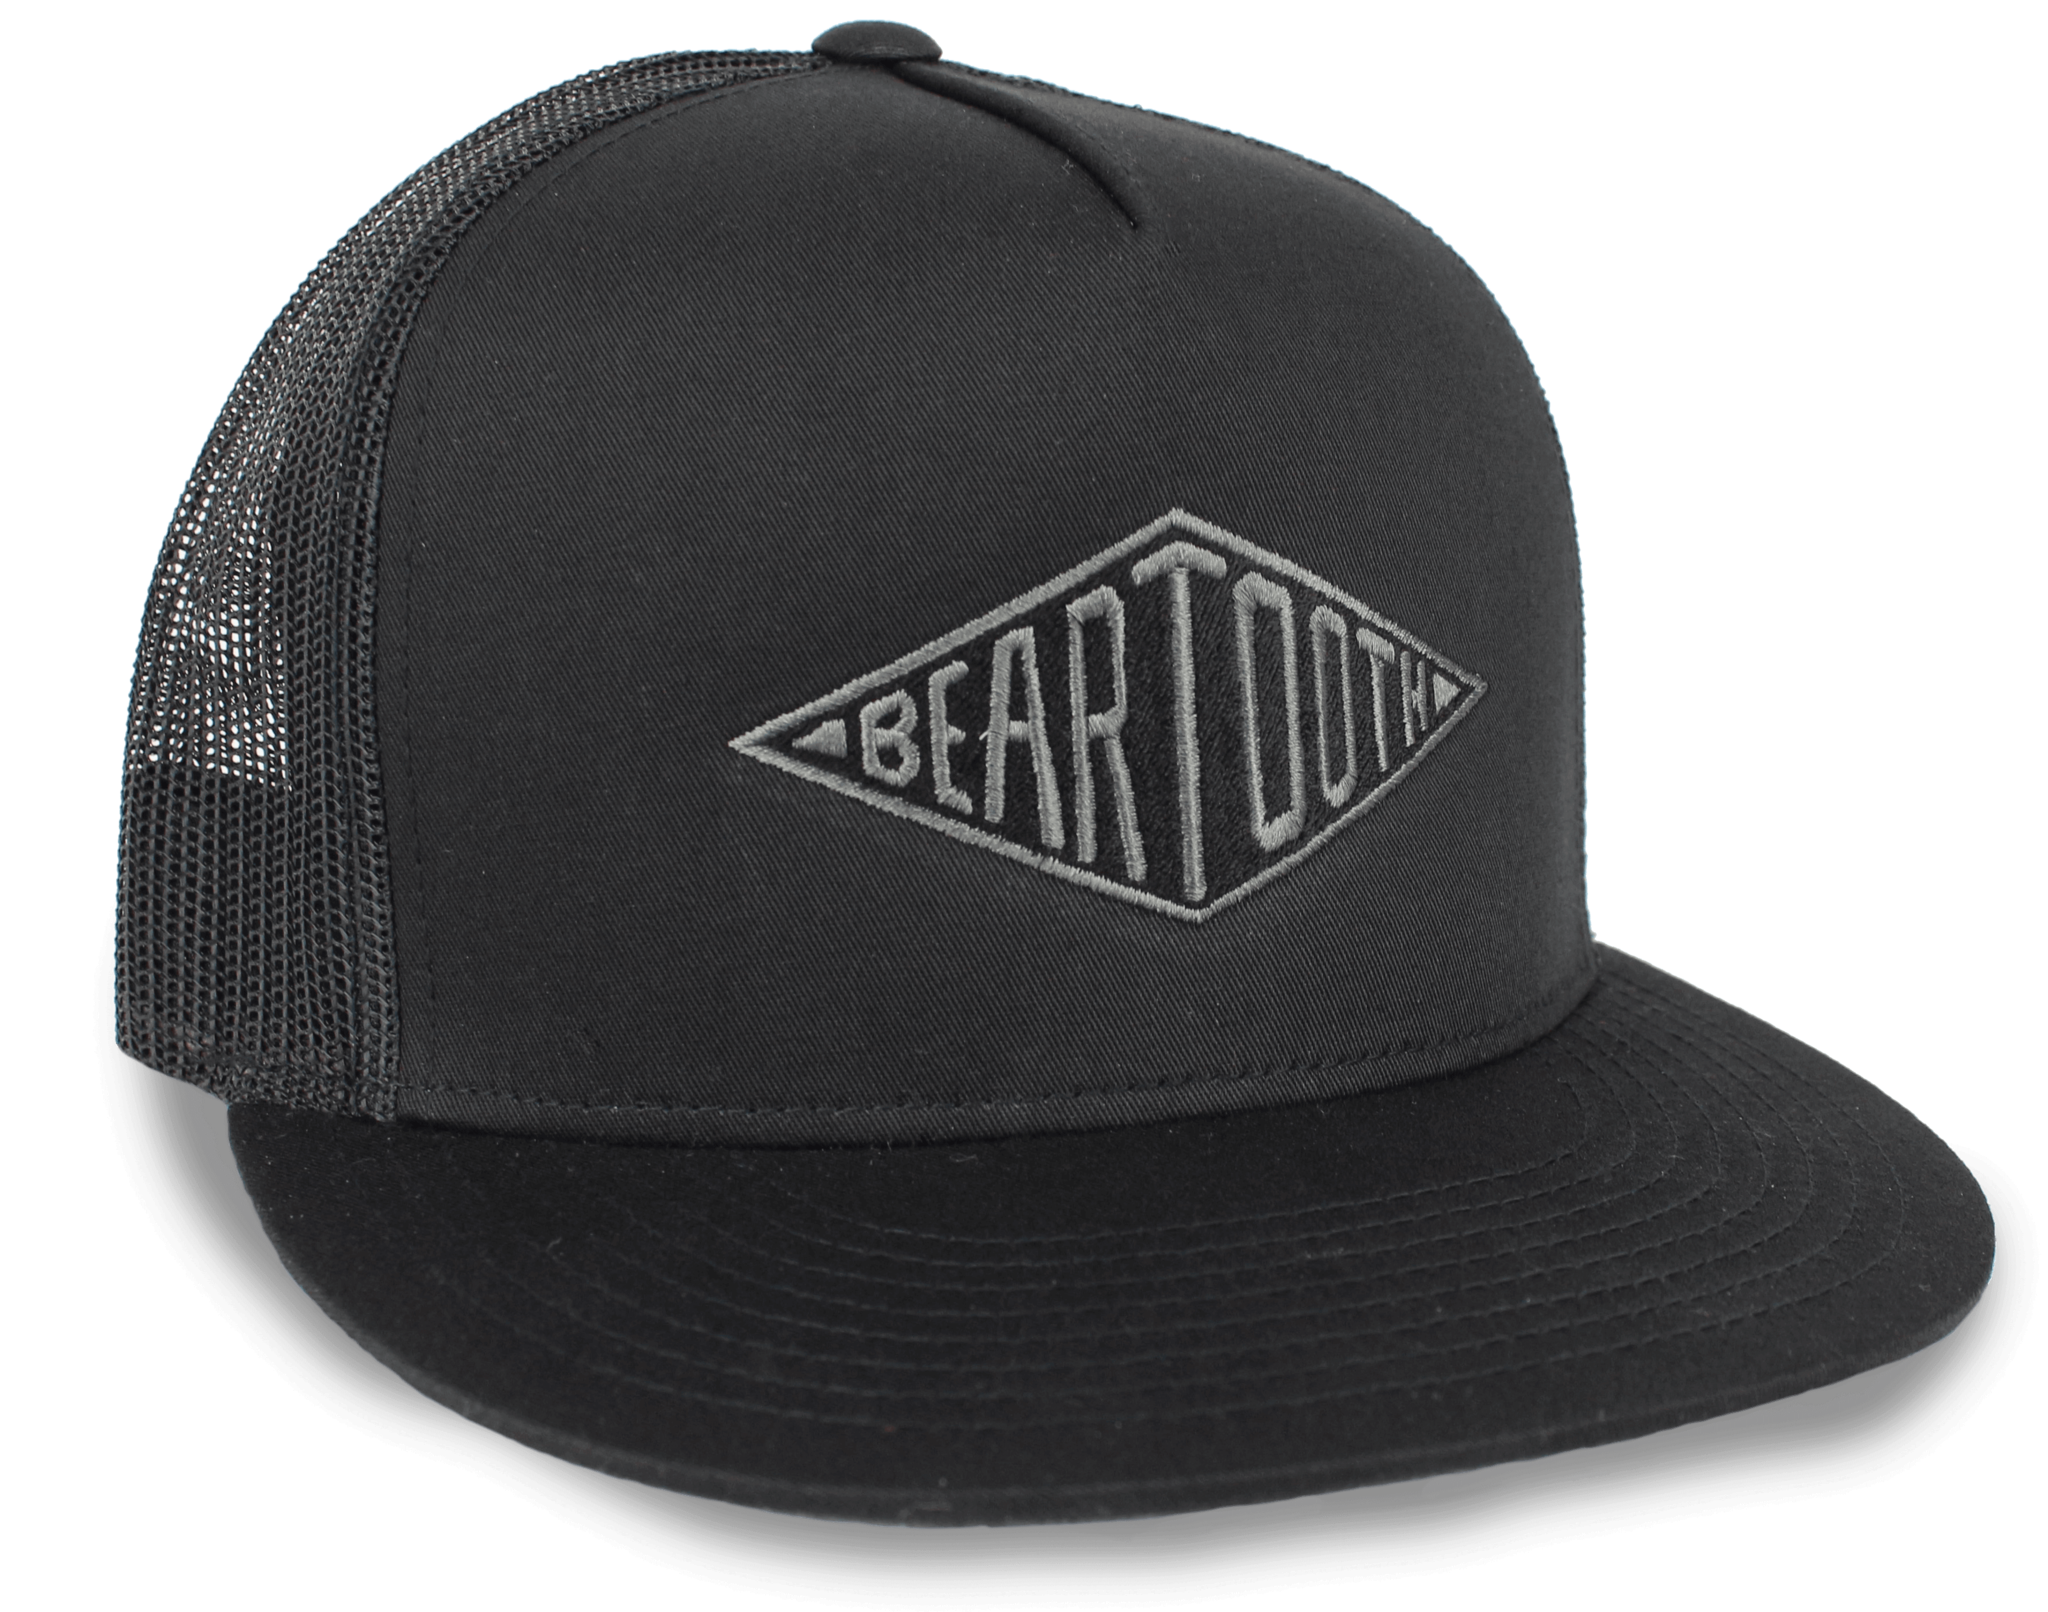 BEARTOOTH DIAMOND HAT in Black – Beartooth Products